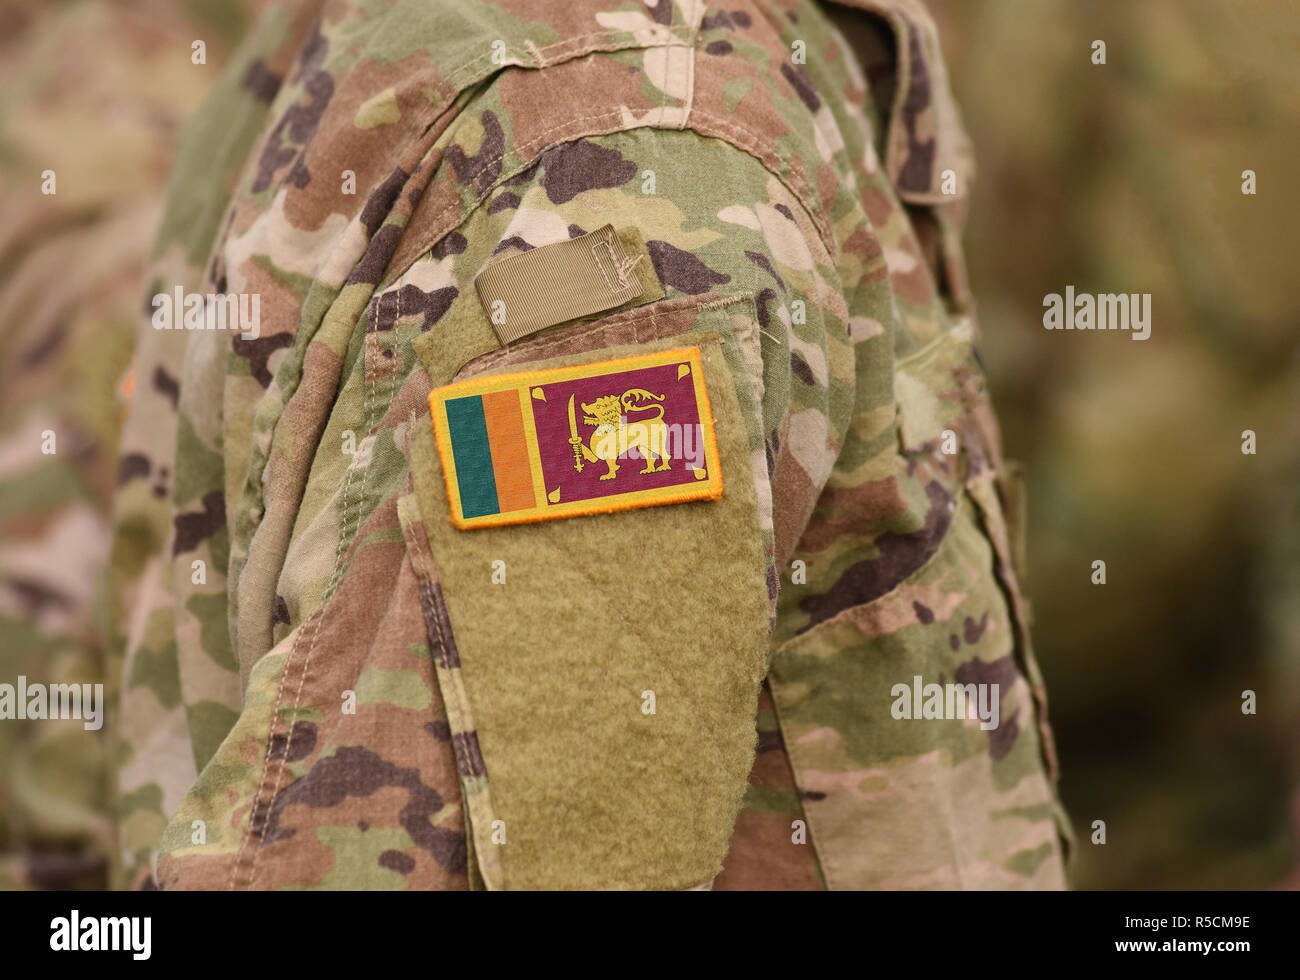 Sri Lanka Army High Resolution Stock Photography And Images Alamy